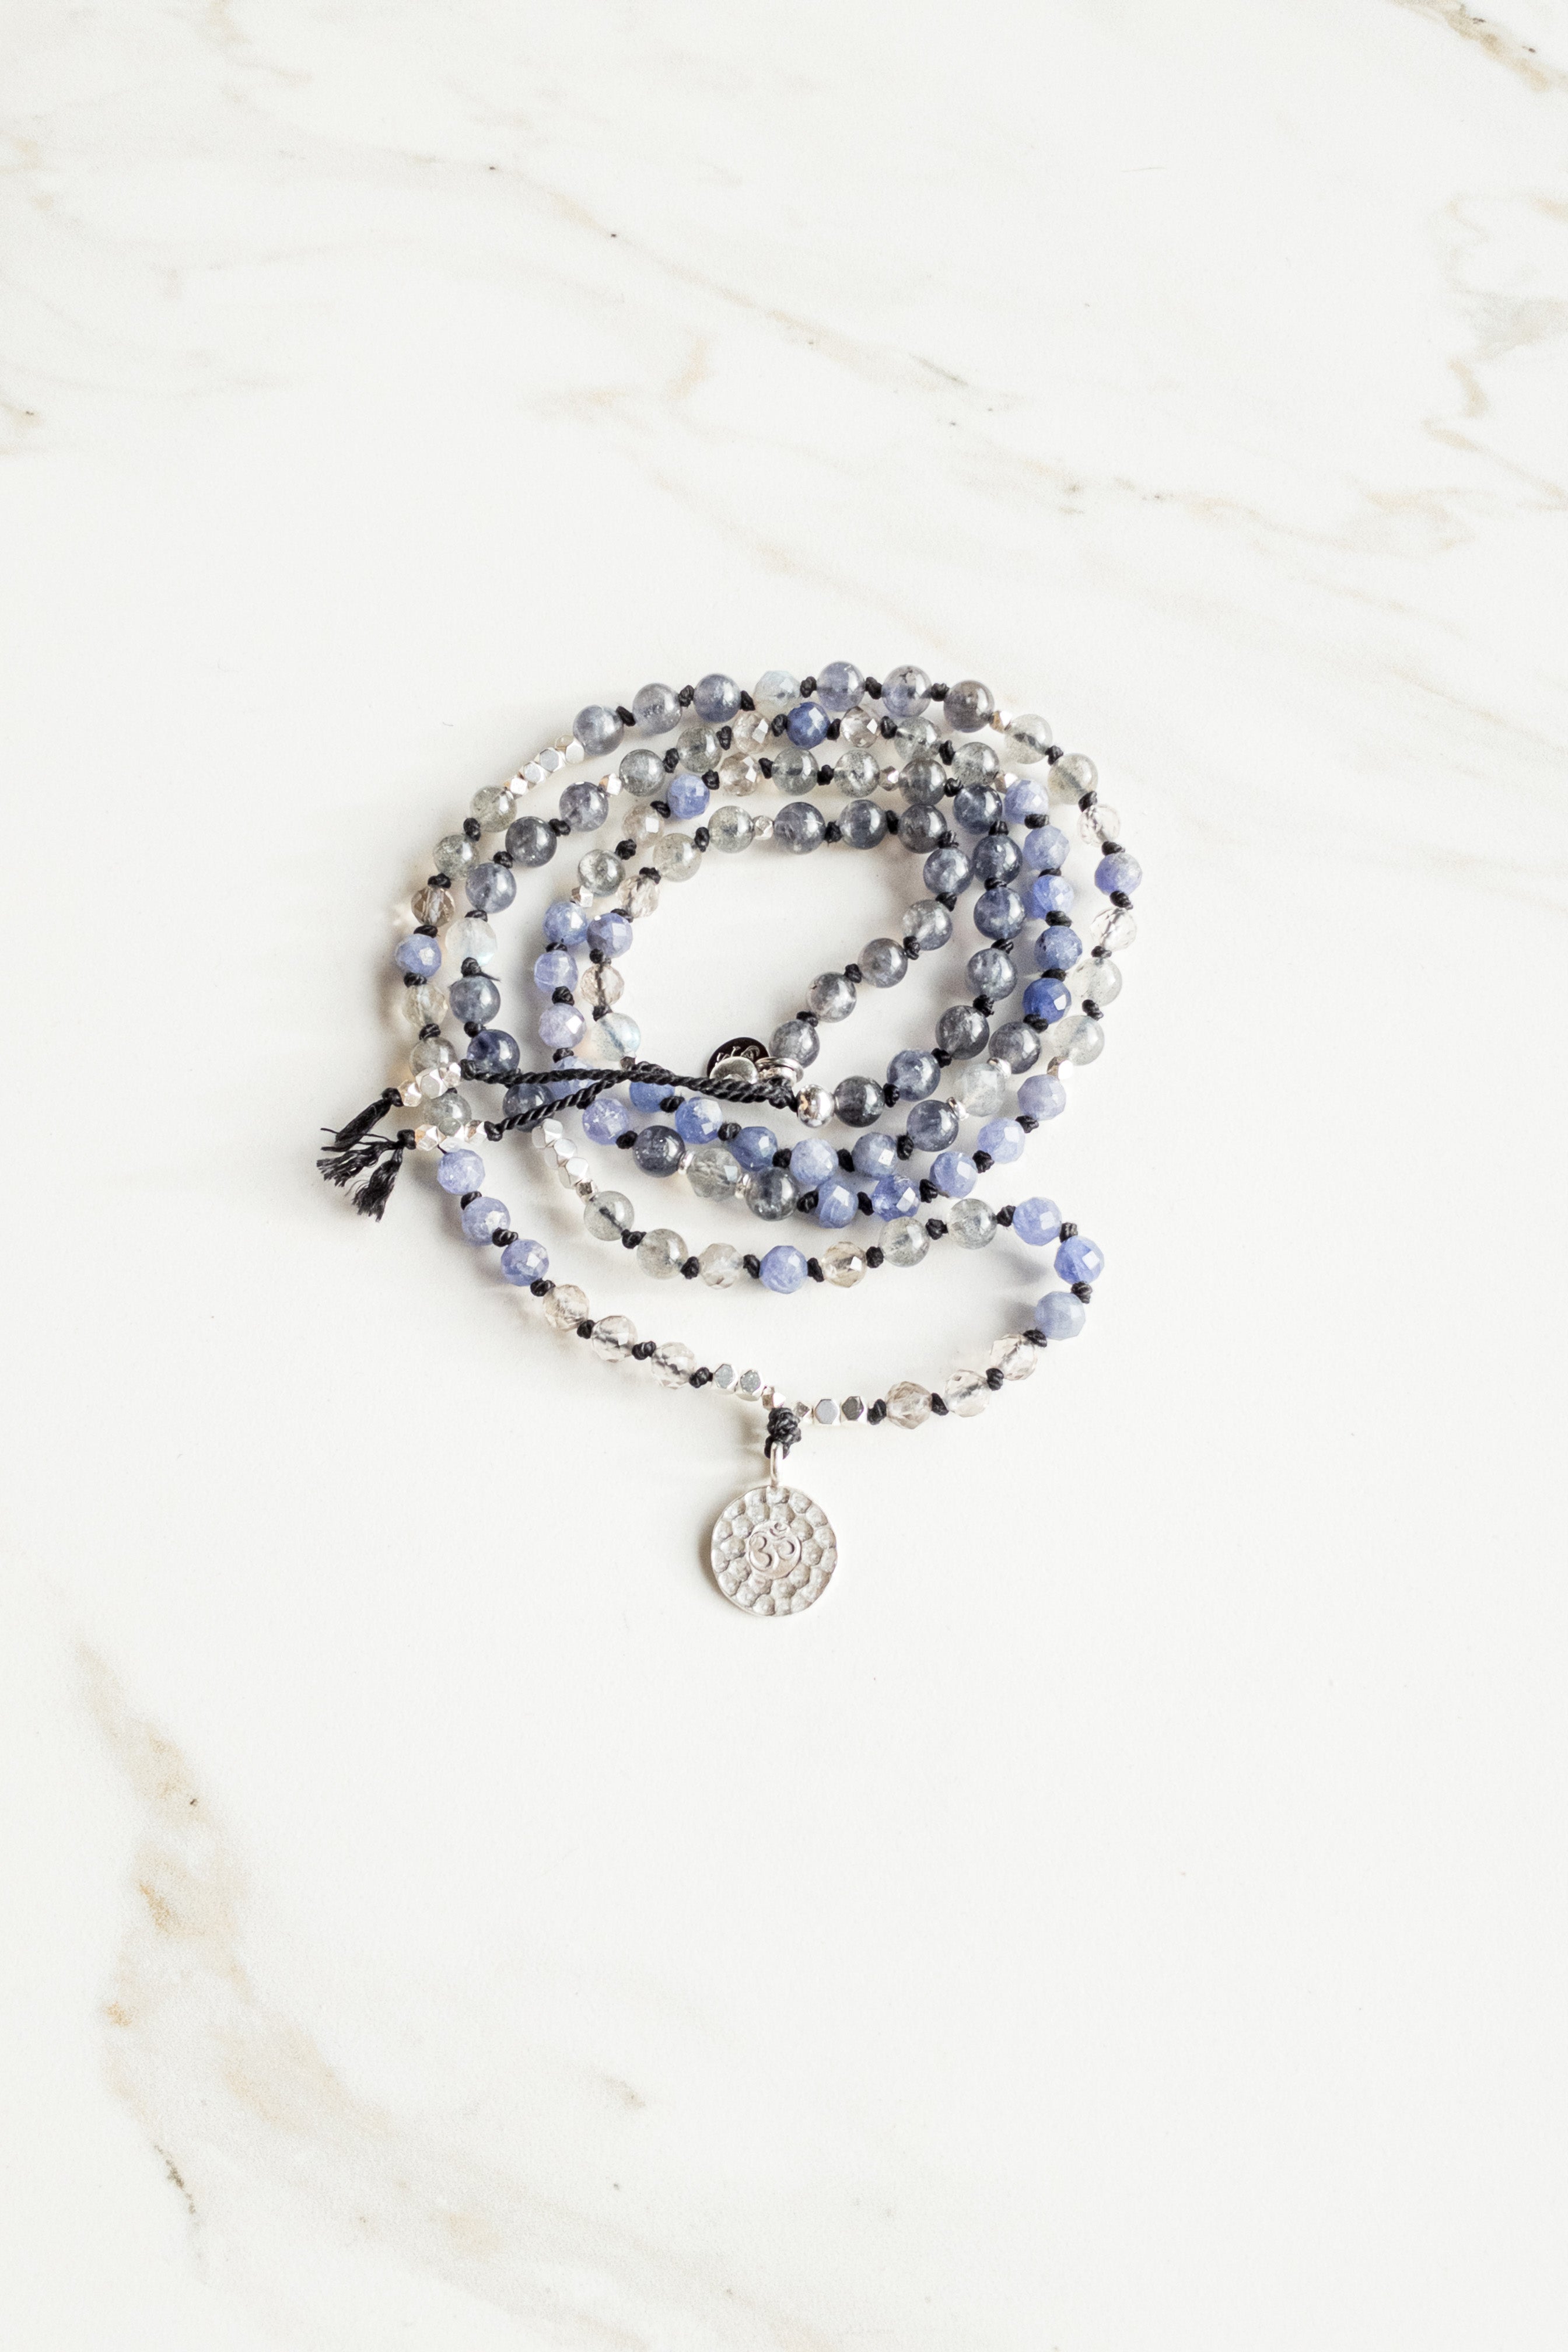 “Lunar Radiance in Abysses” OM Mala necklace - Indradhanush - shashā yoga jewellery store Switzerland 